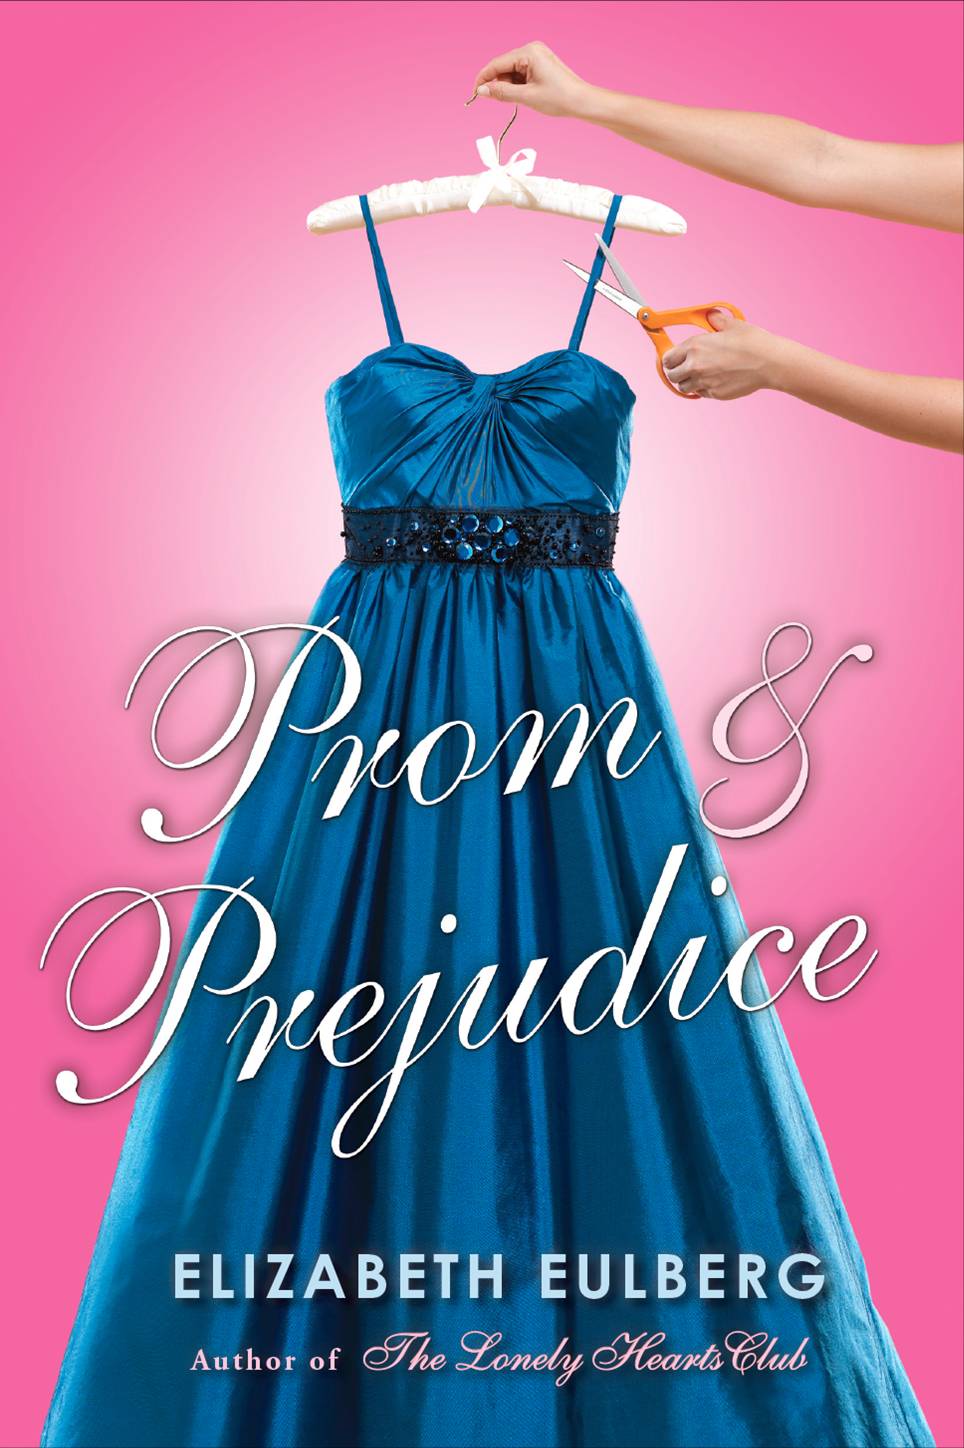 Prom & Prejudice by Elizabeth Eulberg